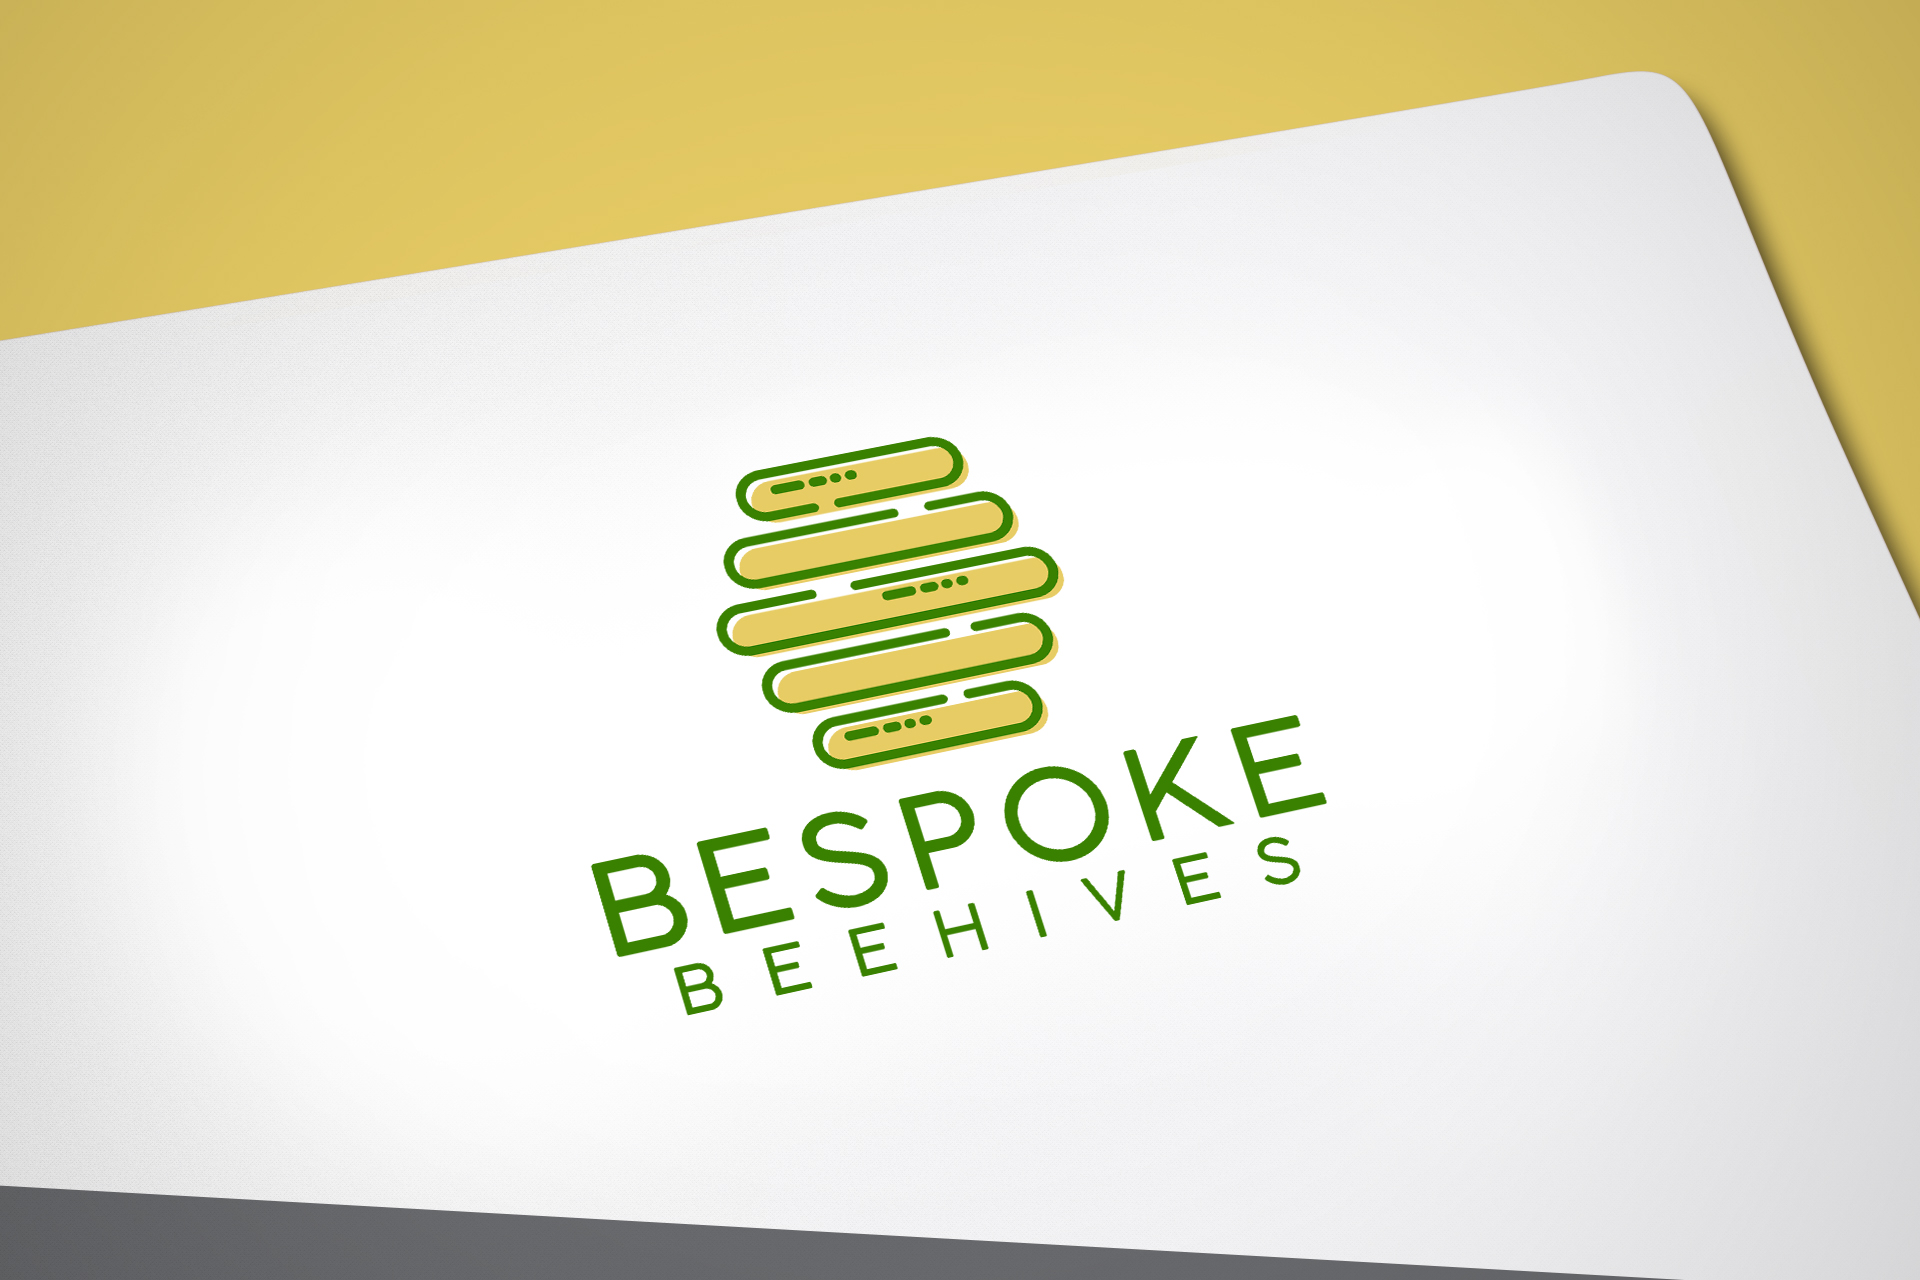 Bespoke Beehives Design #5